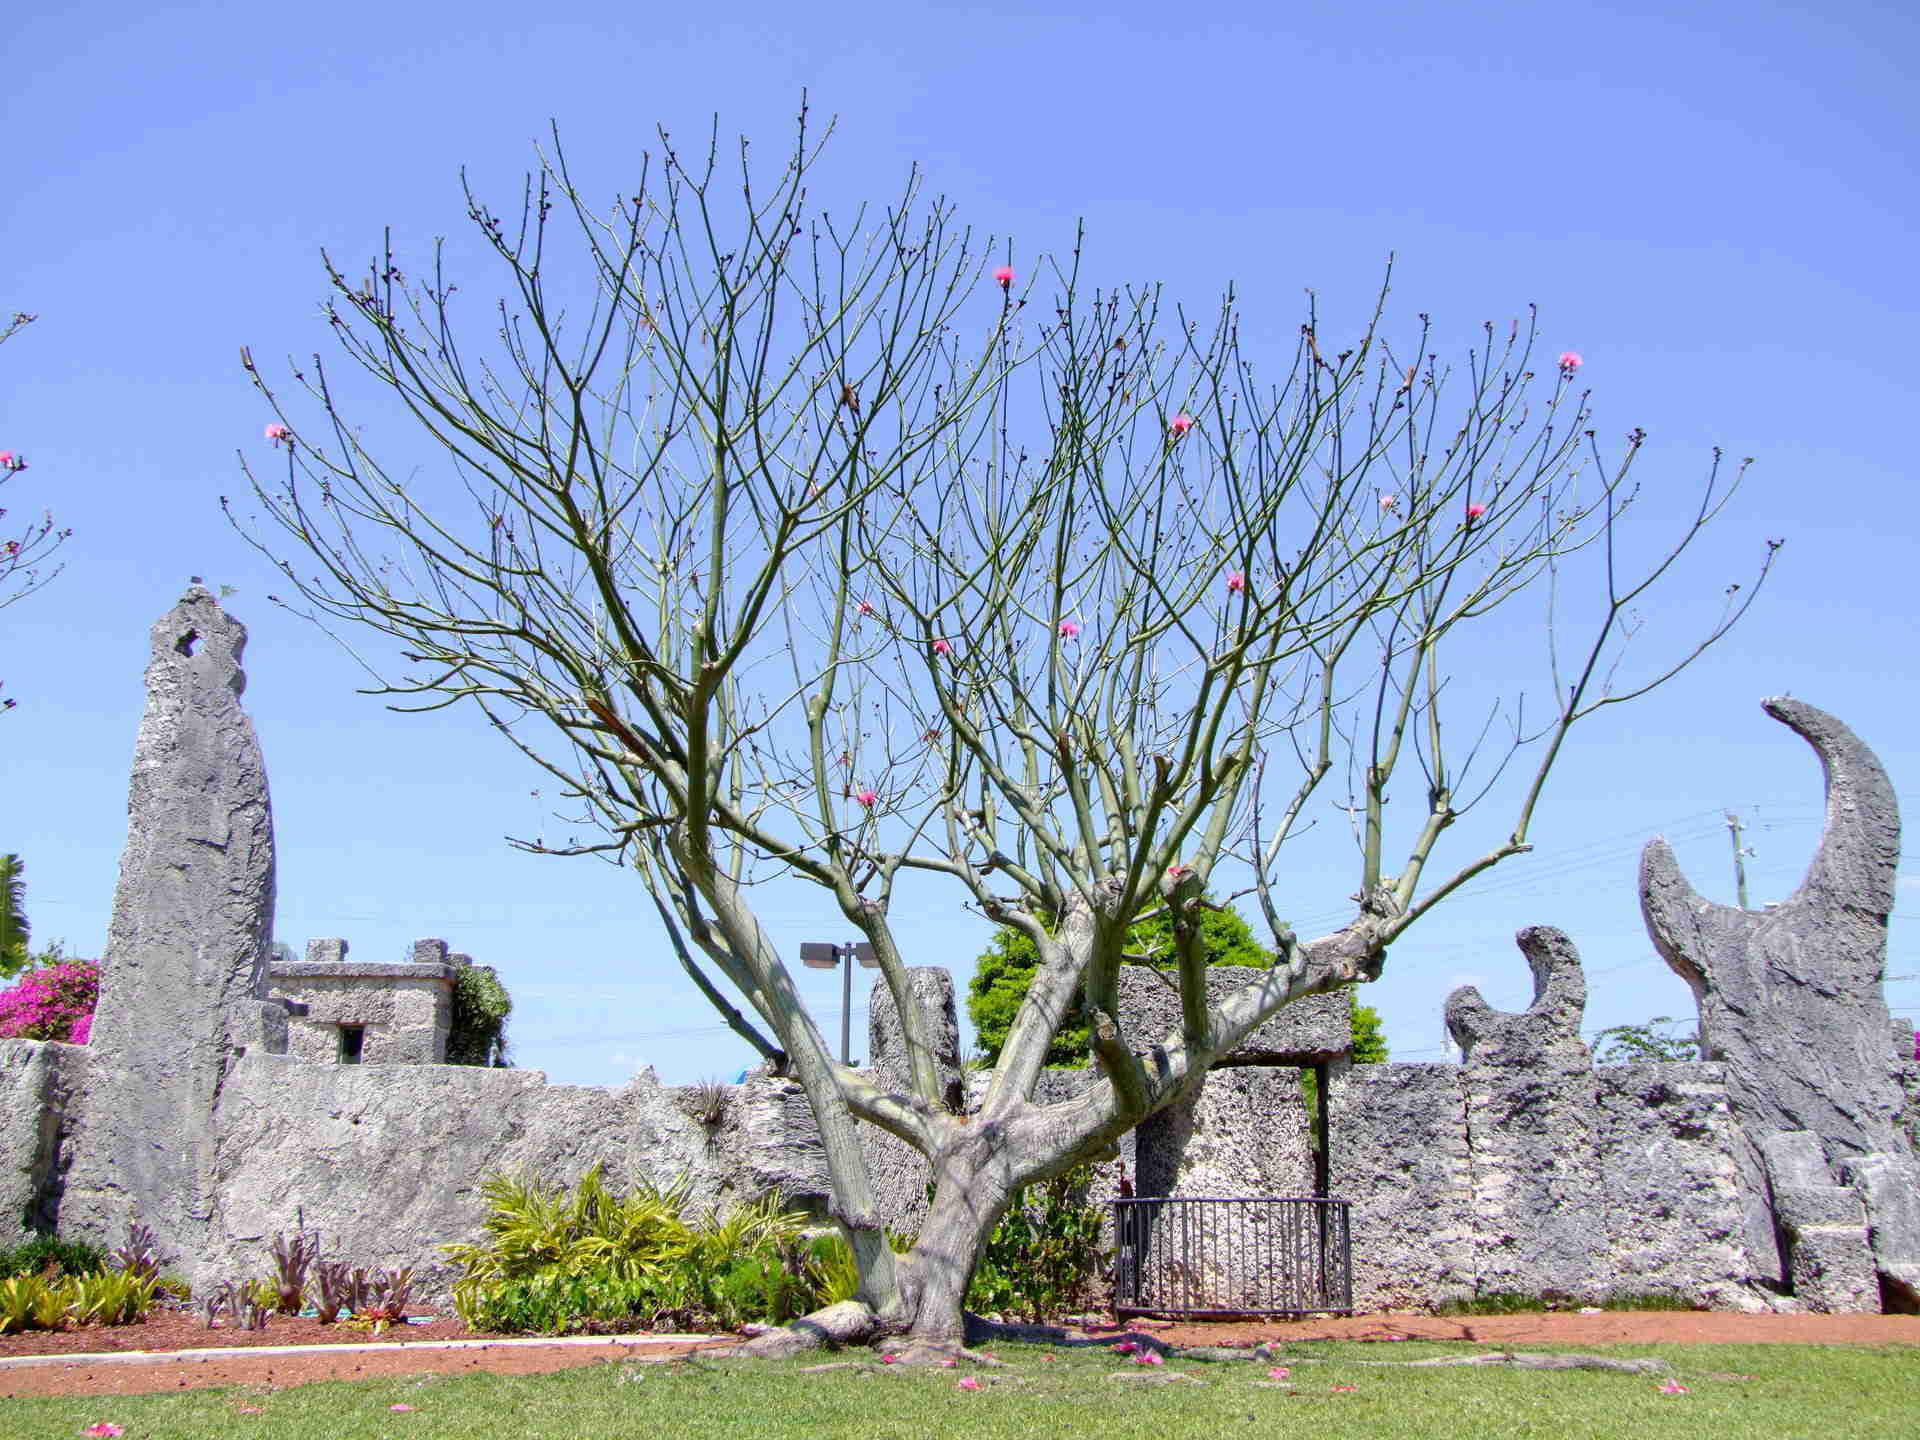 Outside Coral Castle  - Architecture, Blue | Architecture | Tree | Stone | Coral | Castle | People